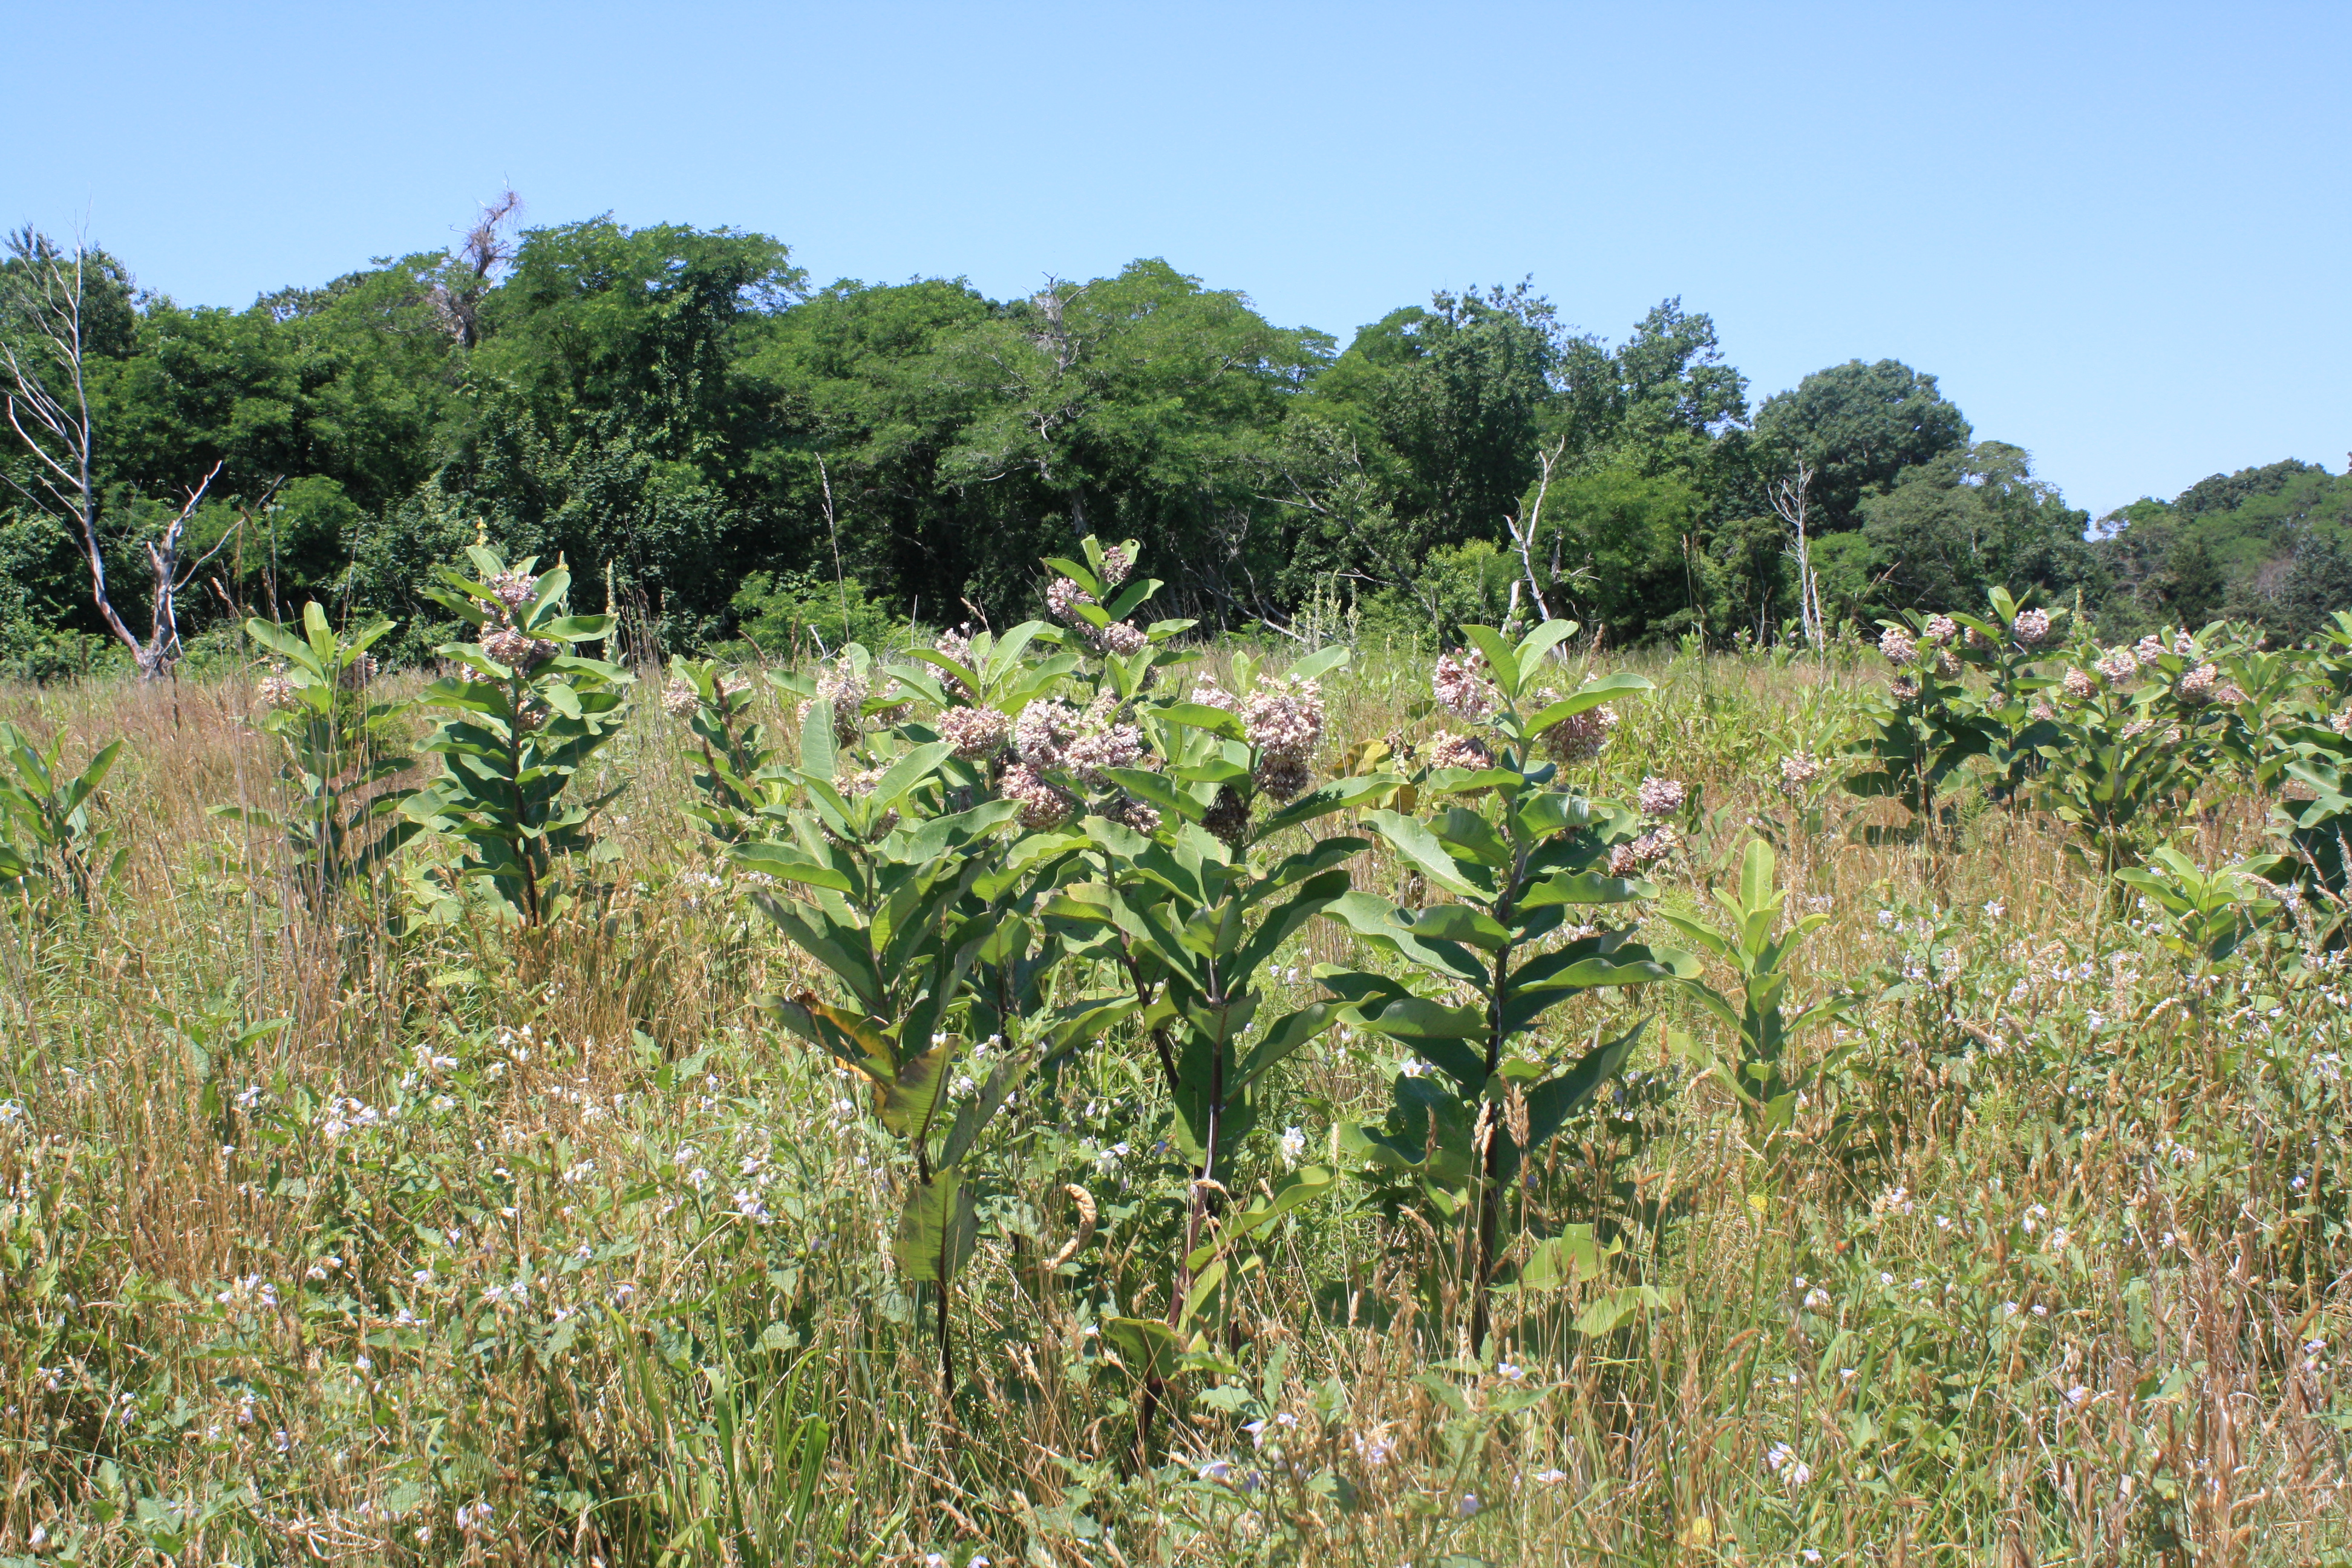 A stand of milkweed flowers in the refuge grasslands